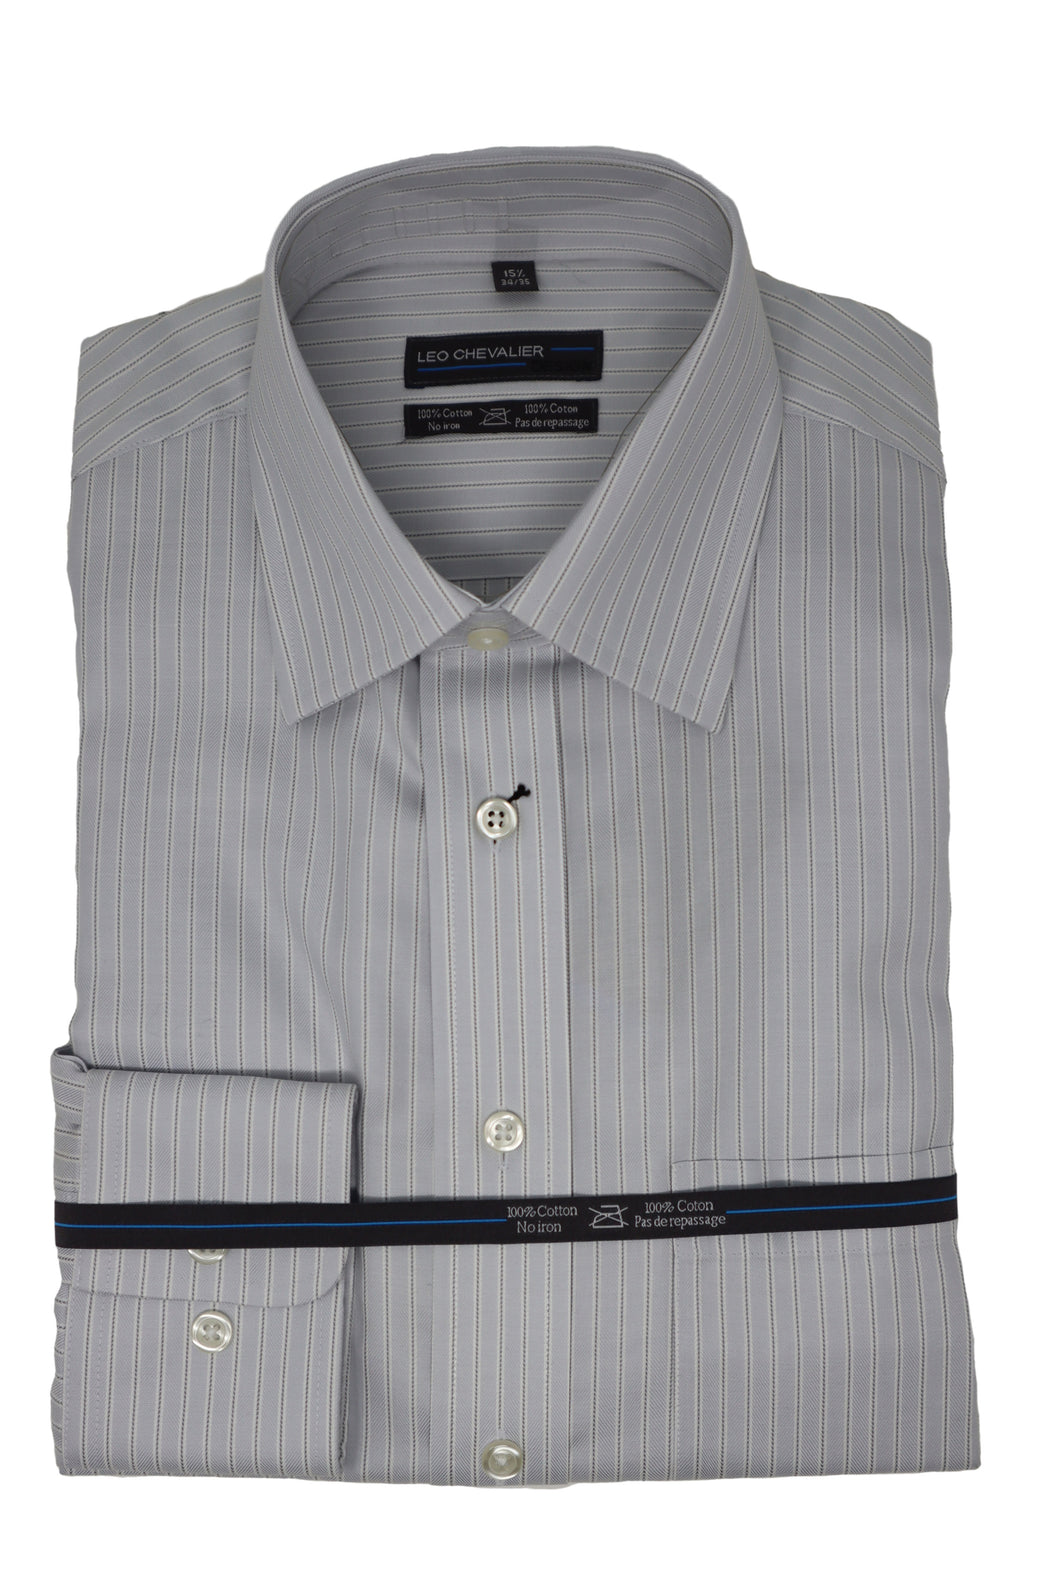 Men's | Leo Chevalier | 329175 | Dress Shirt | Silver